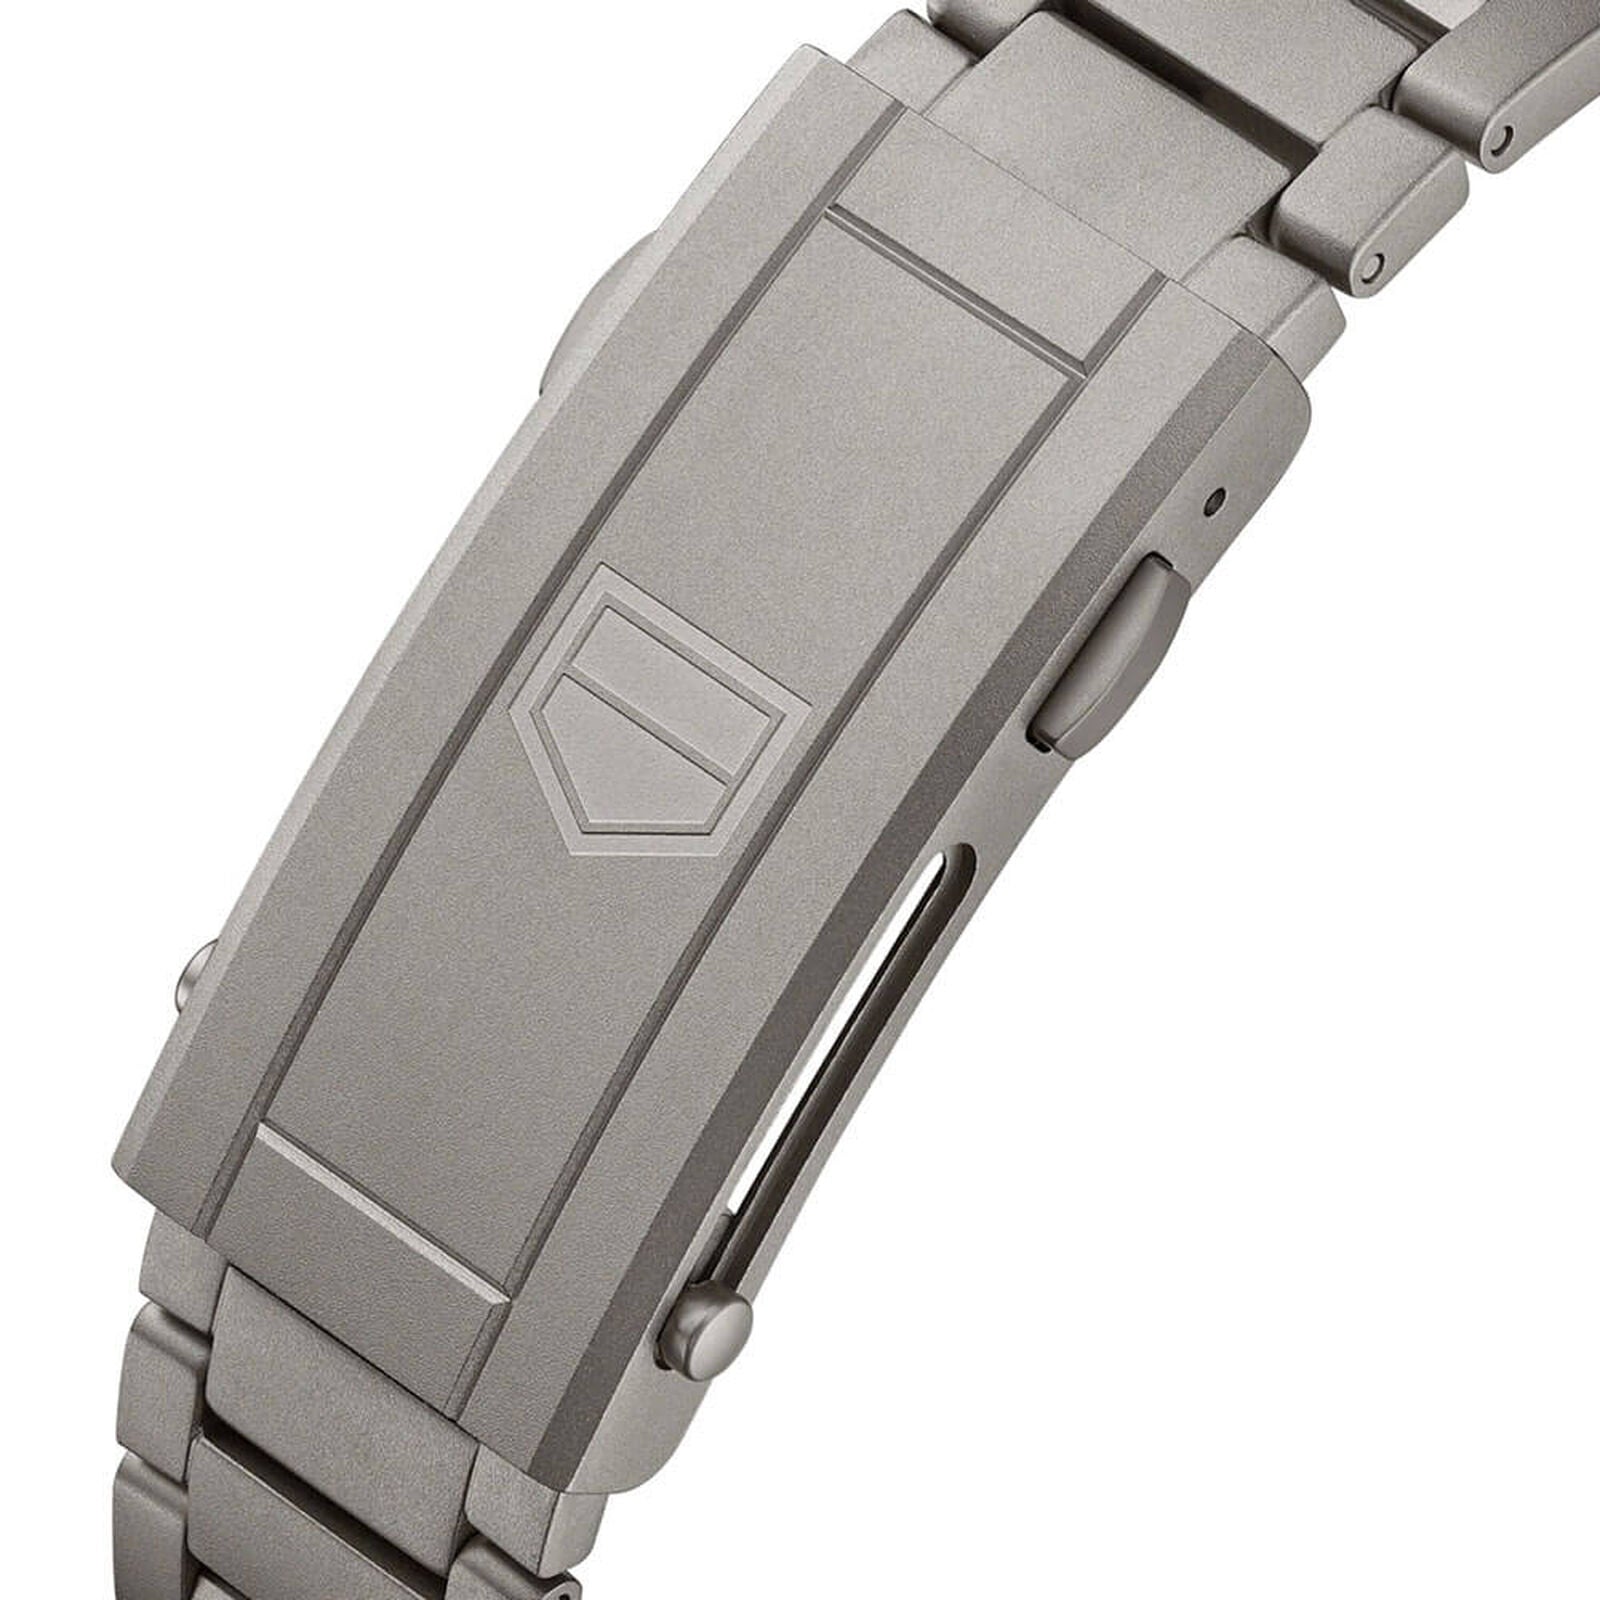 Tag Heuer Steel 43mm Automatic Aquaracer Watch